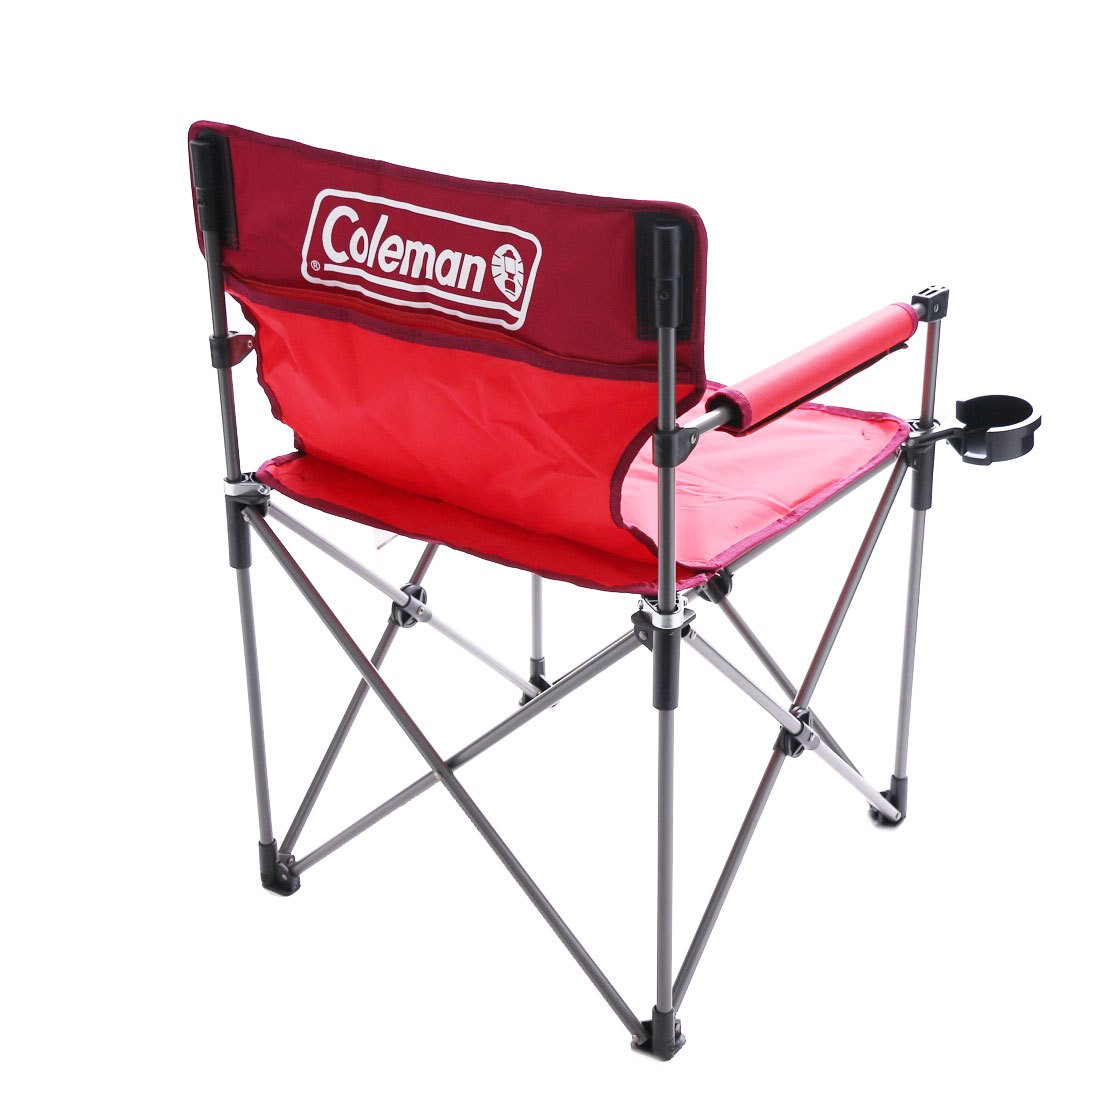 COLEMAN C006 Slim Red Japan Chair